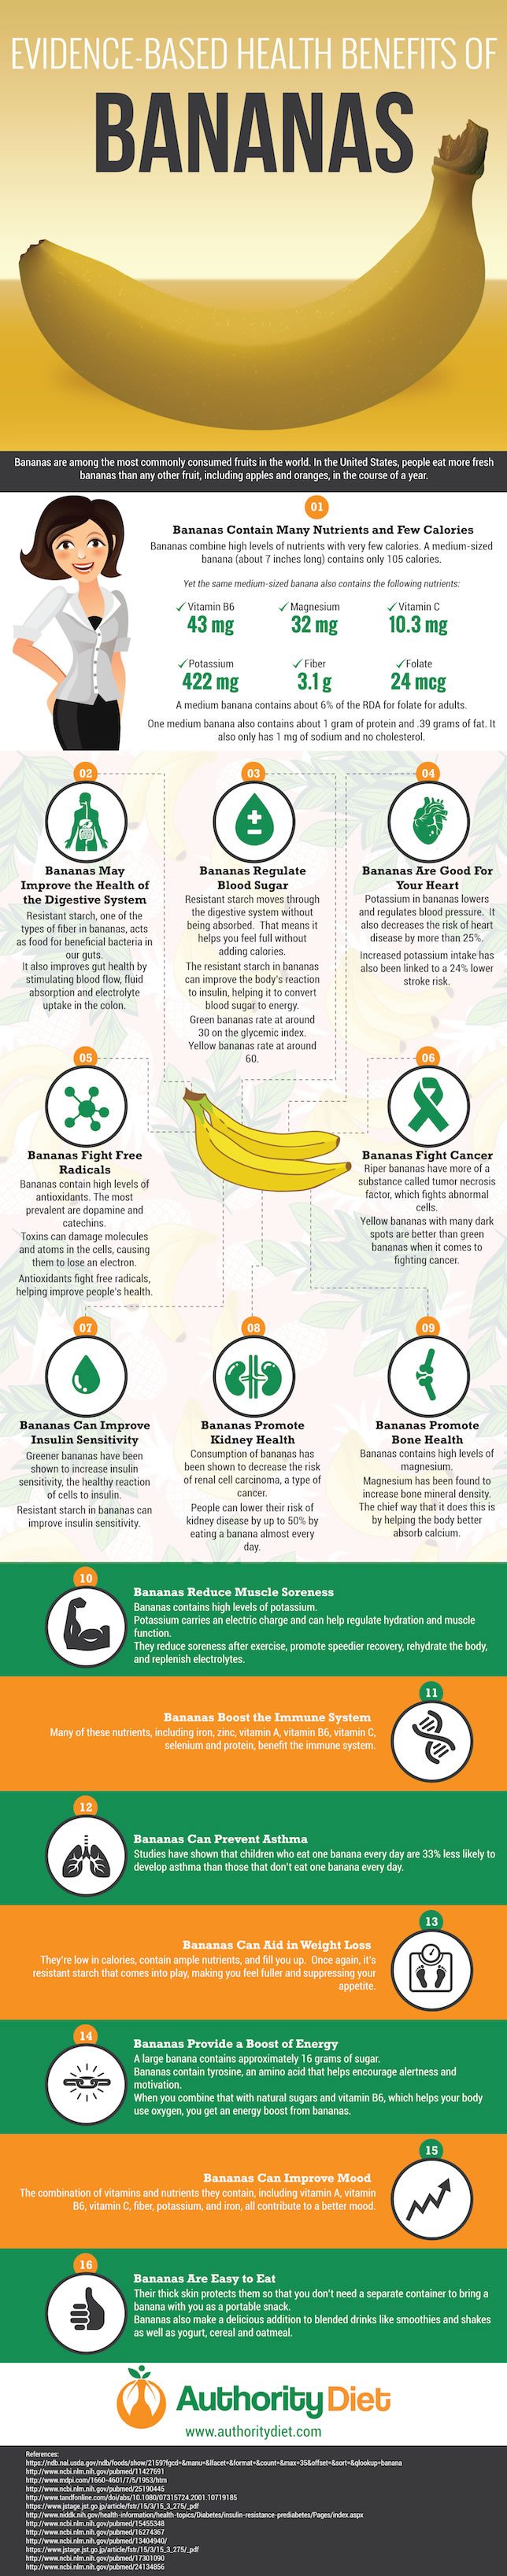 Evidence-Based Health Benefits of Bananas